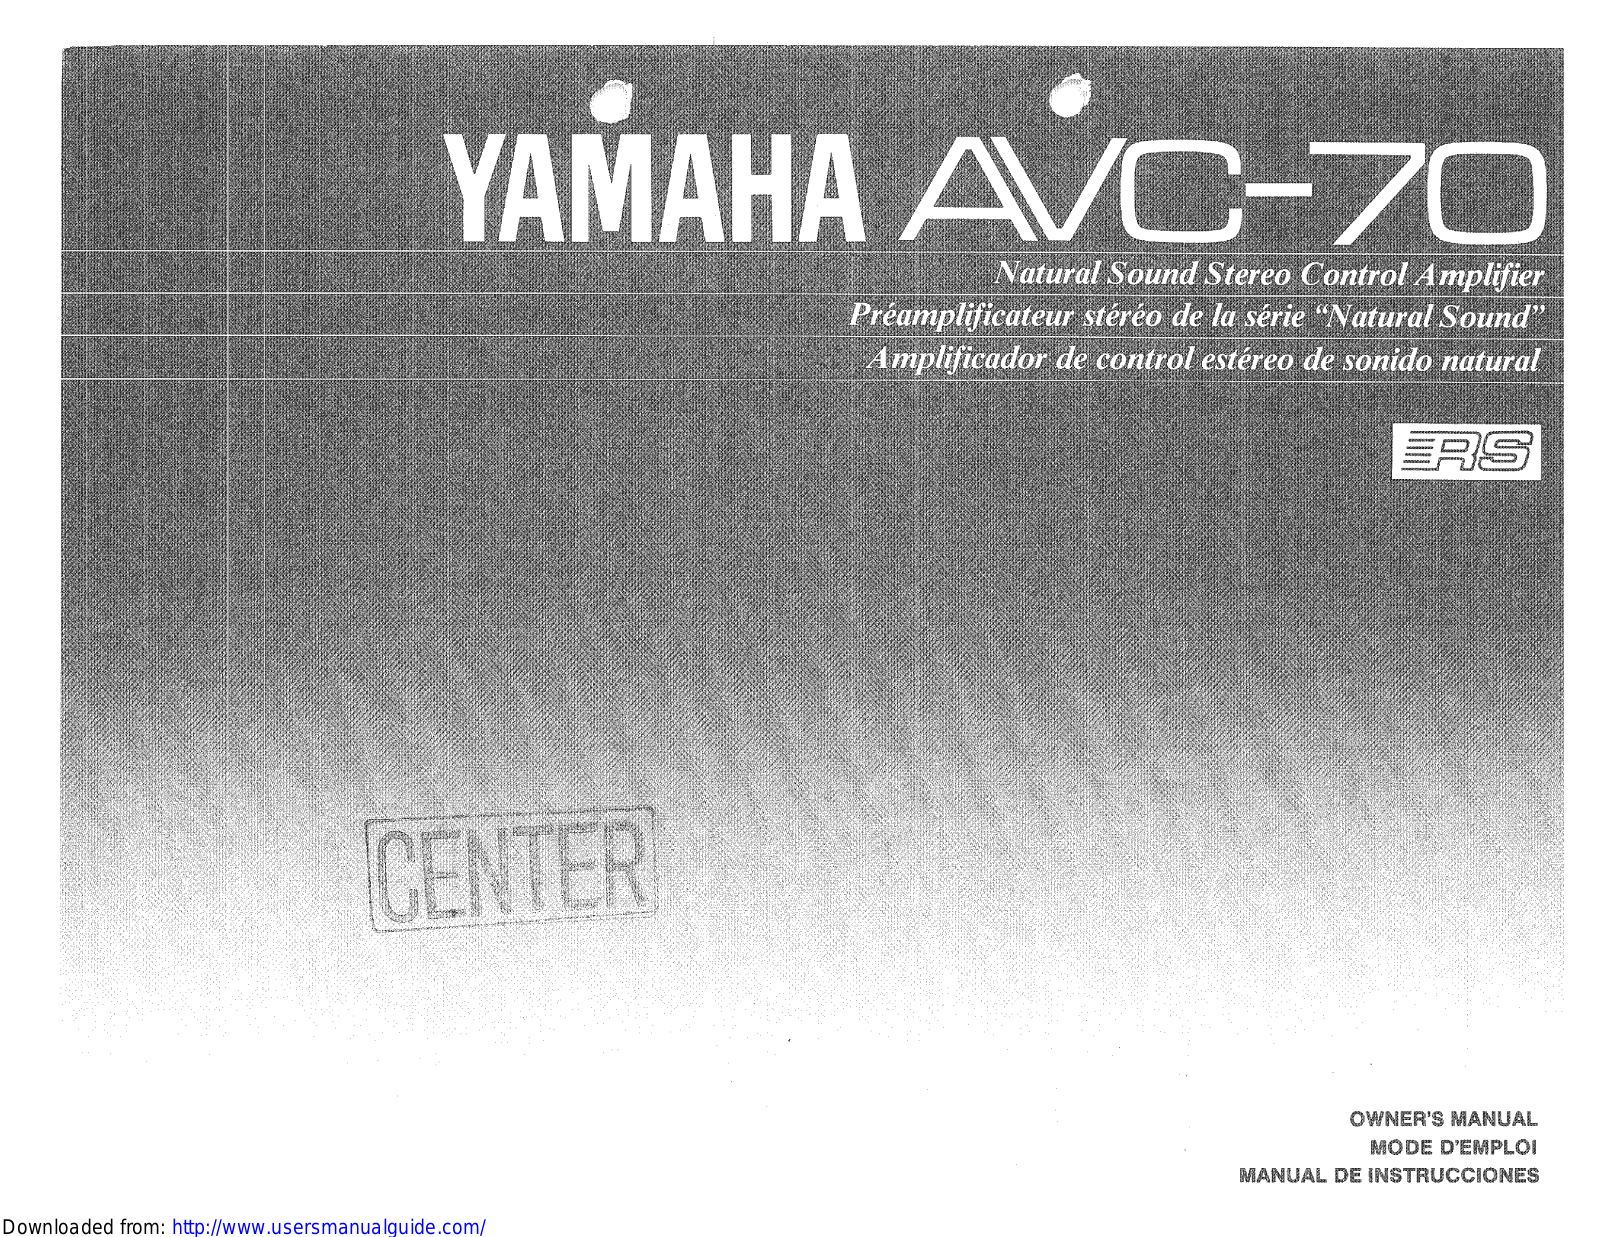 Yamaha Audio AVC-70 User Manual